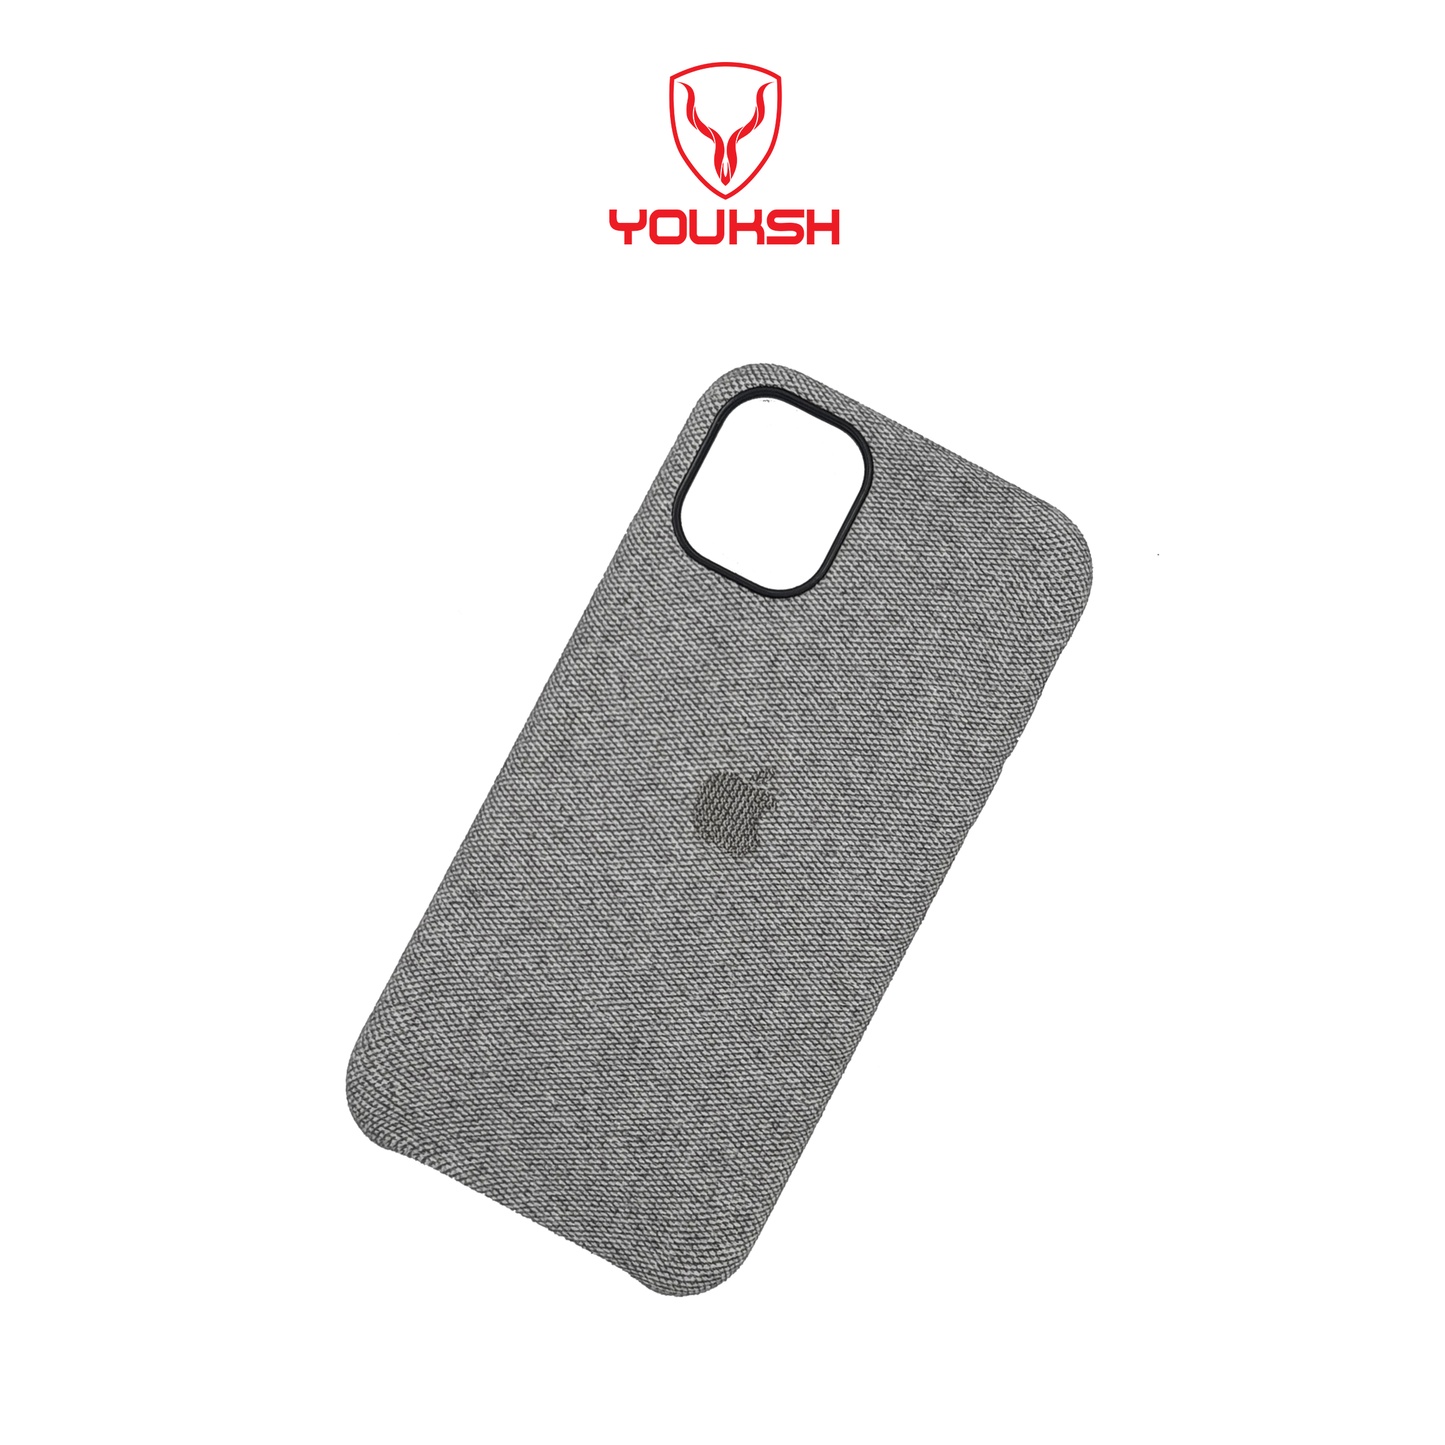 Apple iphone 11 Pro - Youksh Canvas Case - Hot Popular Phone Case.